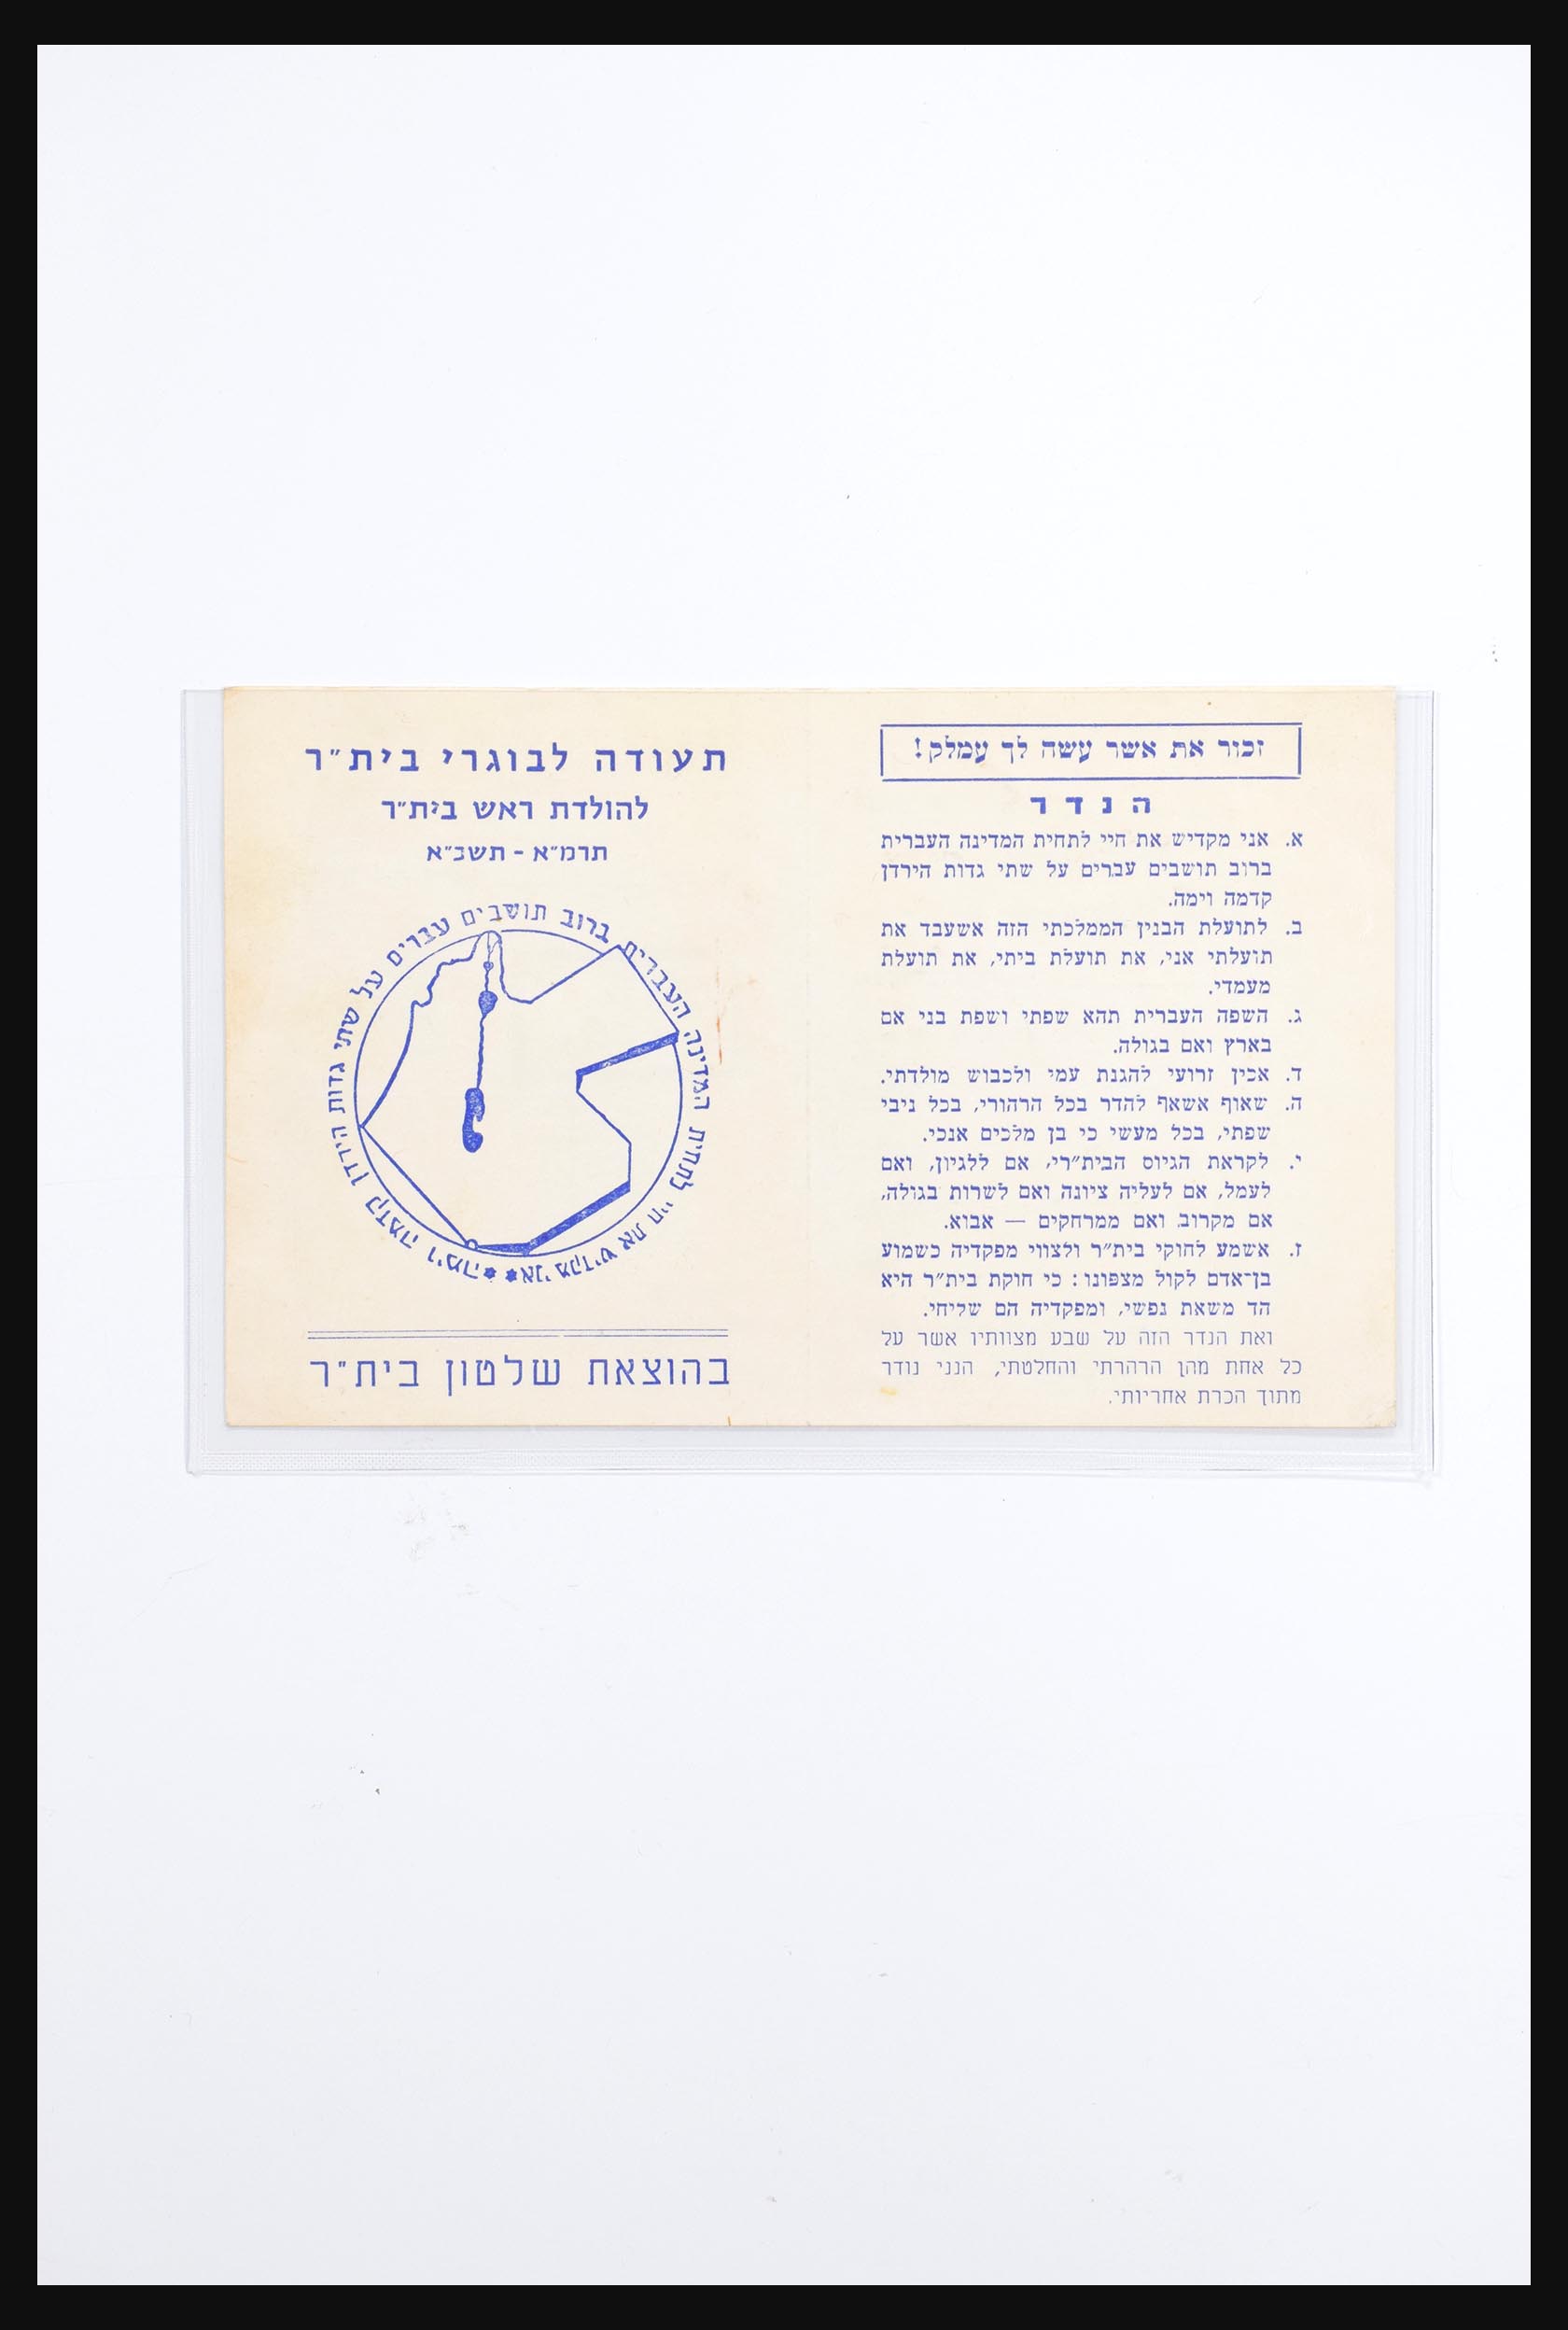 30731 367 - 30731 Israel/Palestina ephemera 1948-1980.